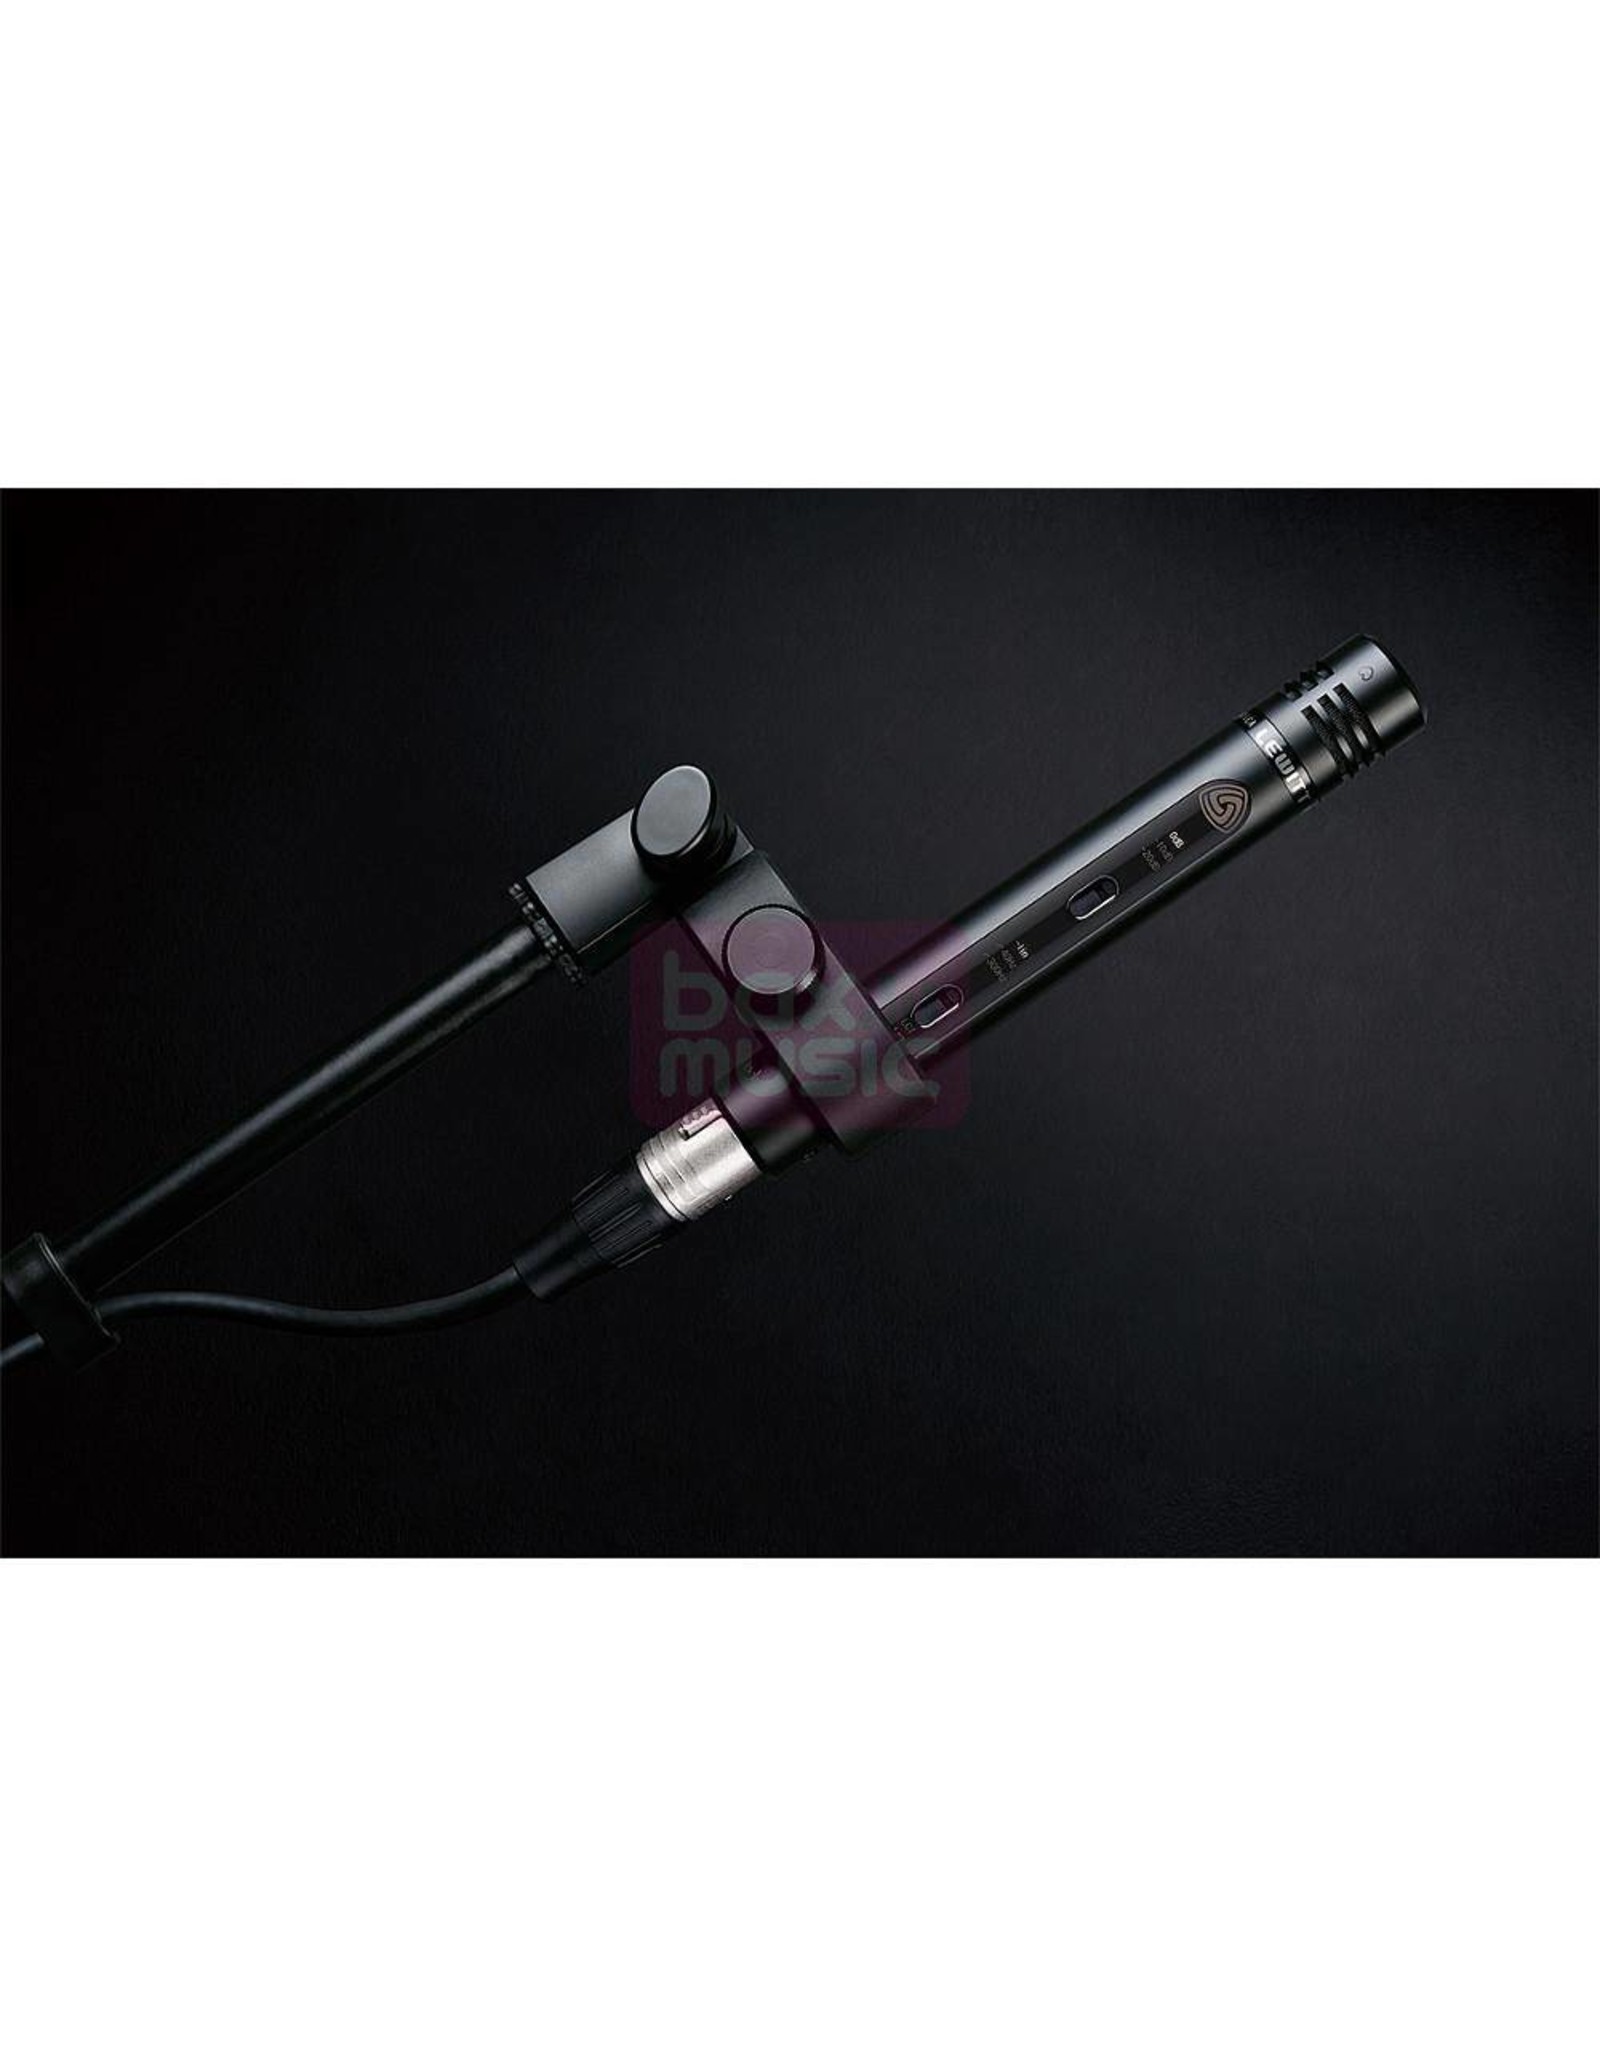 Lewitt  LCT140 authentica condenser microphone